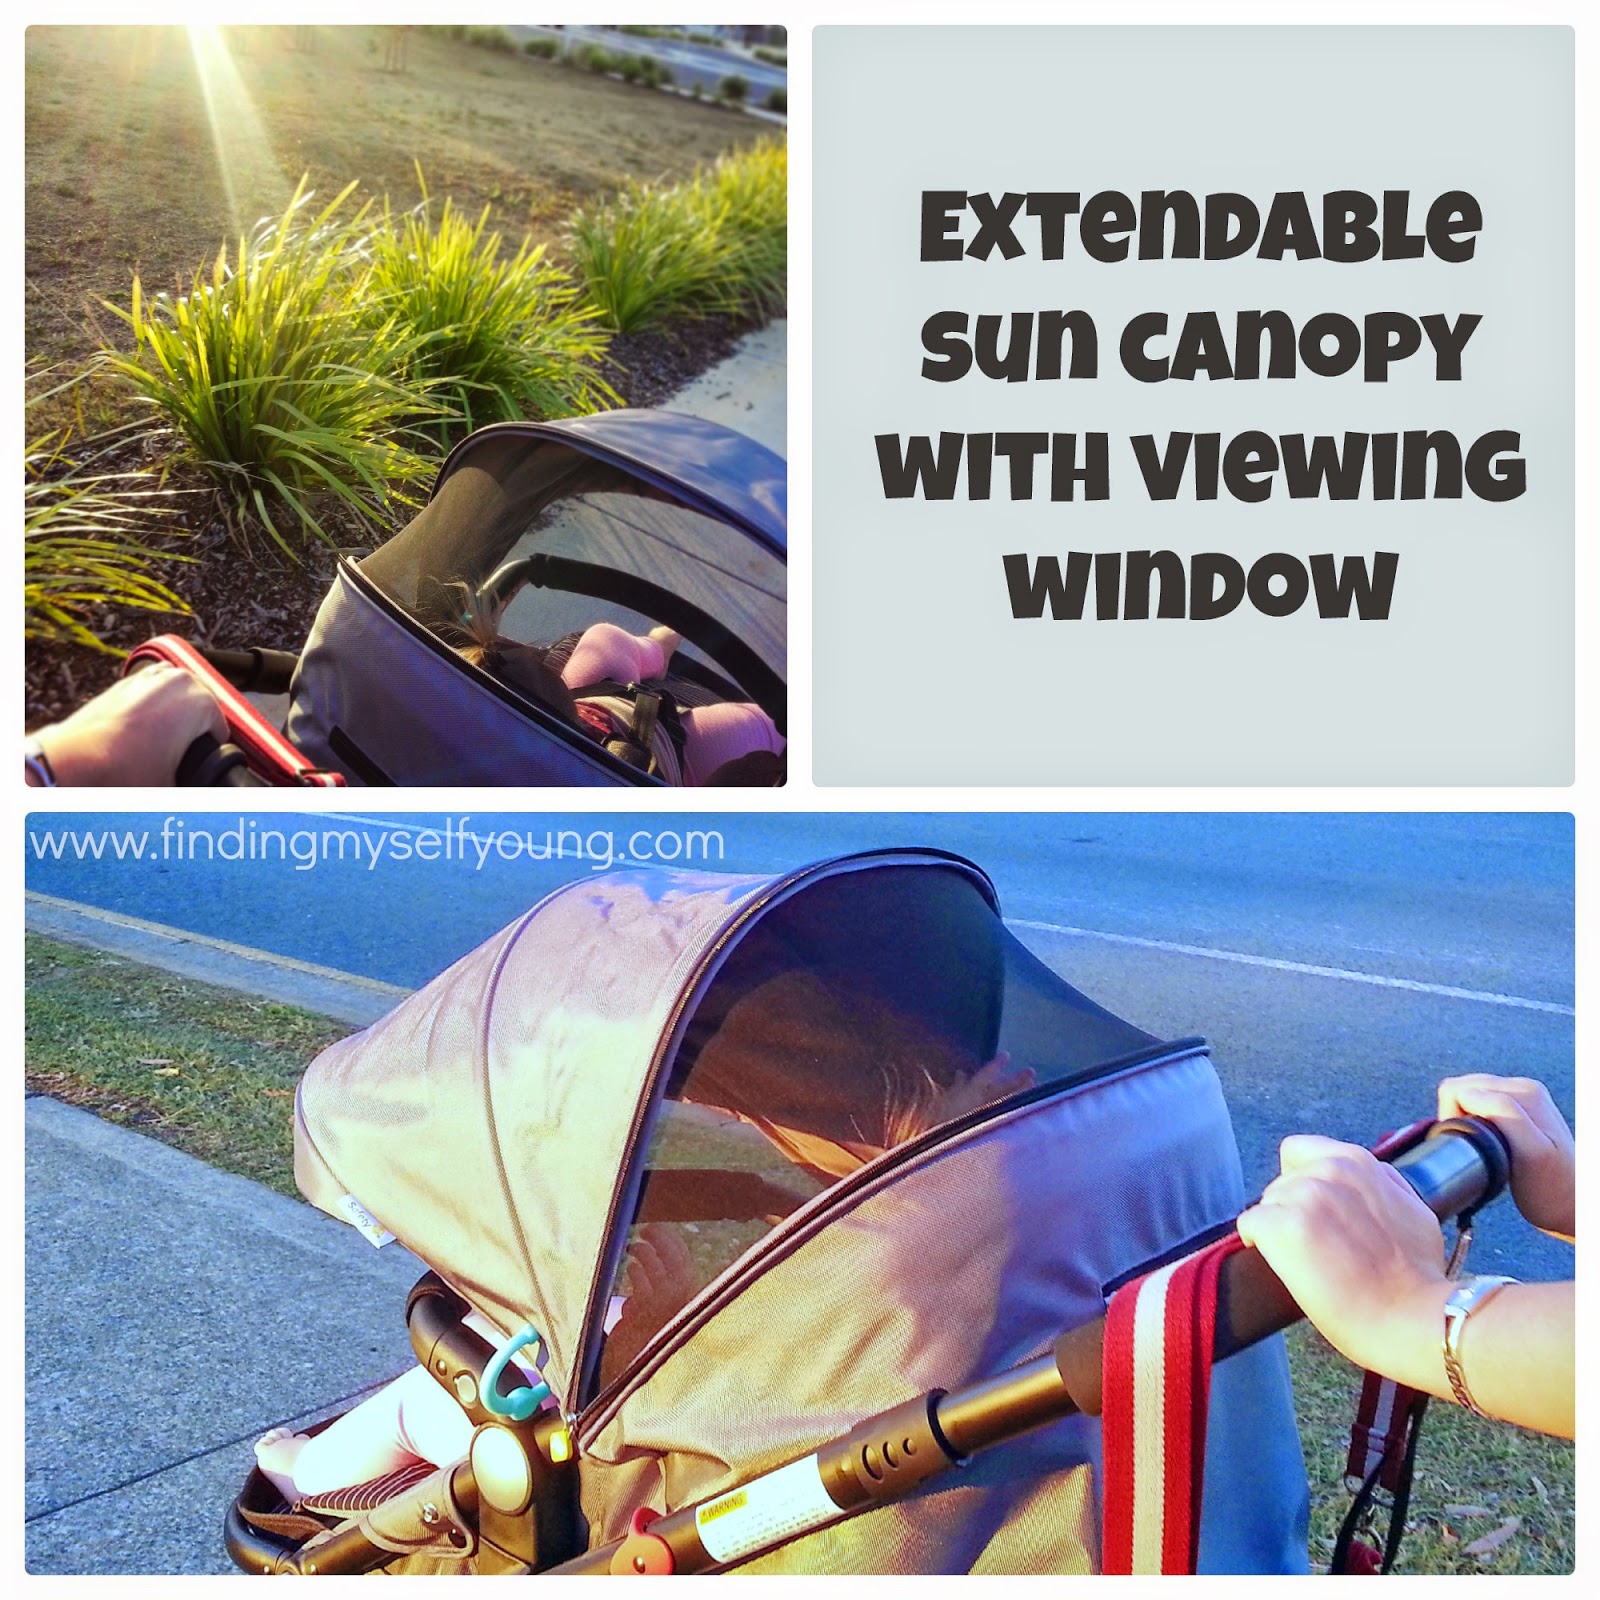 Safety 1st Wanderer 3 wheel pram extendible sun canopy